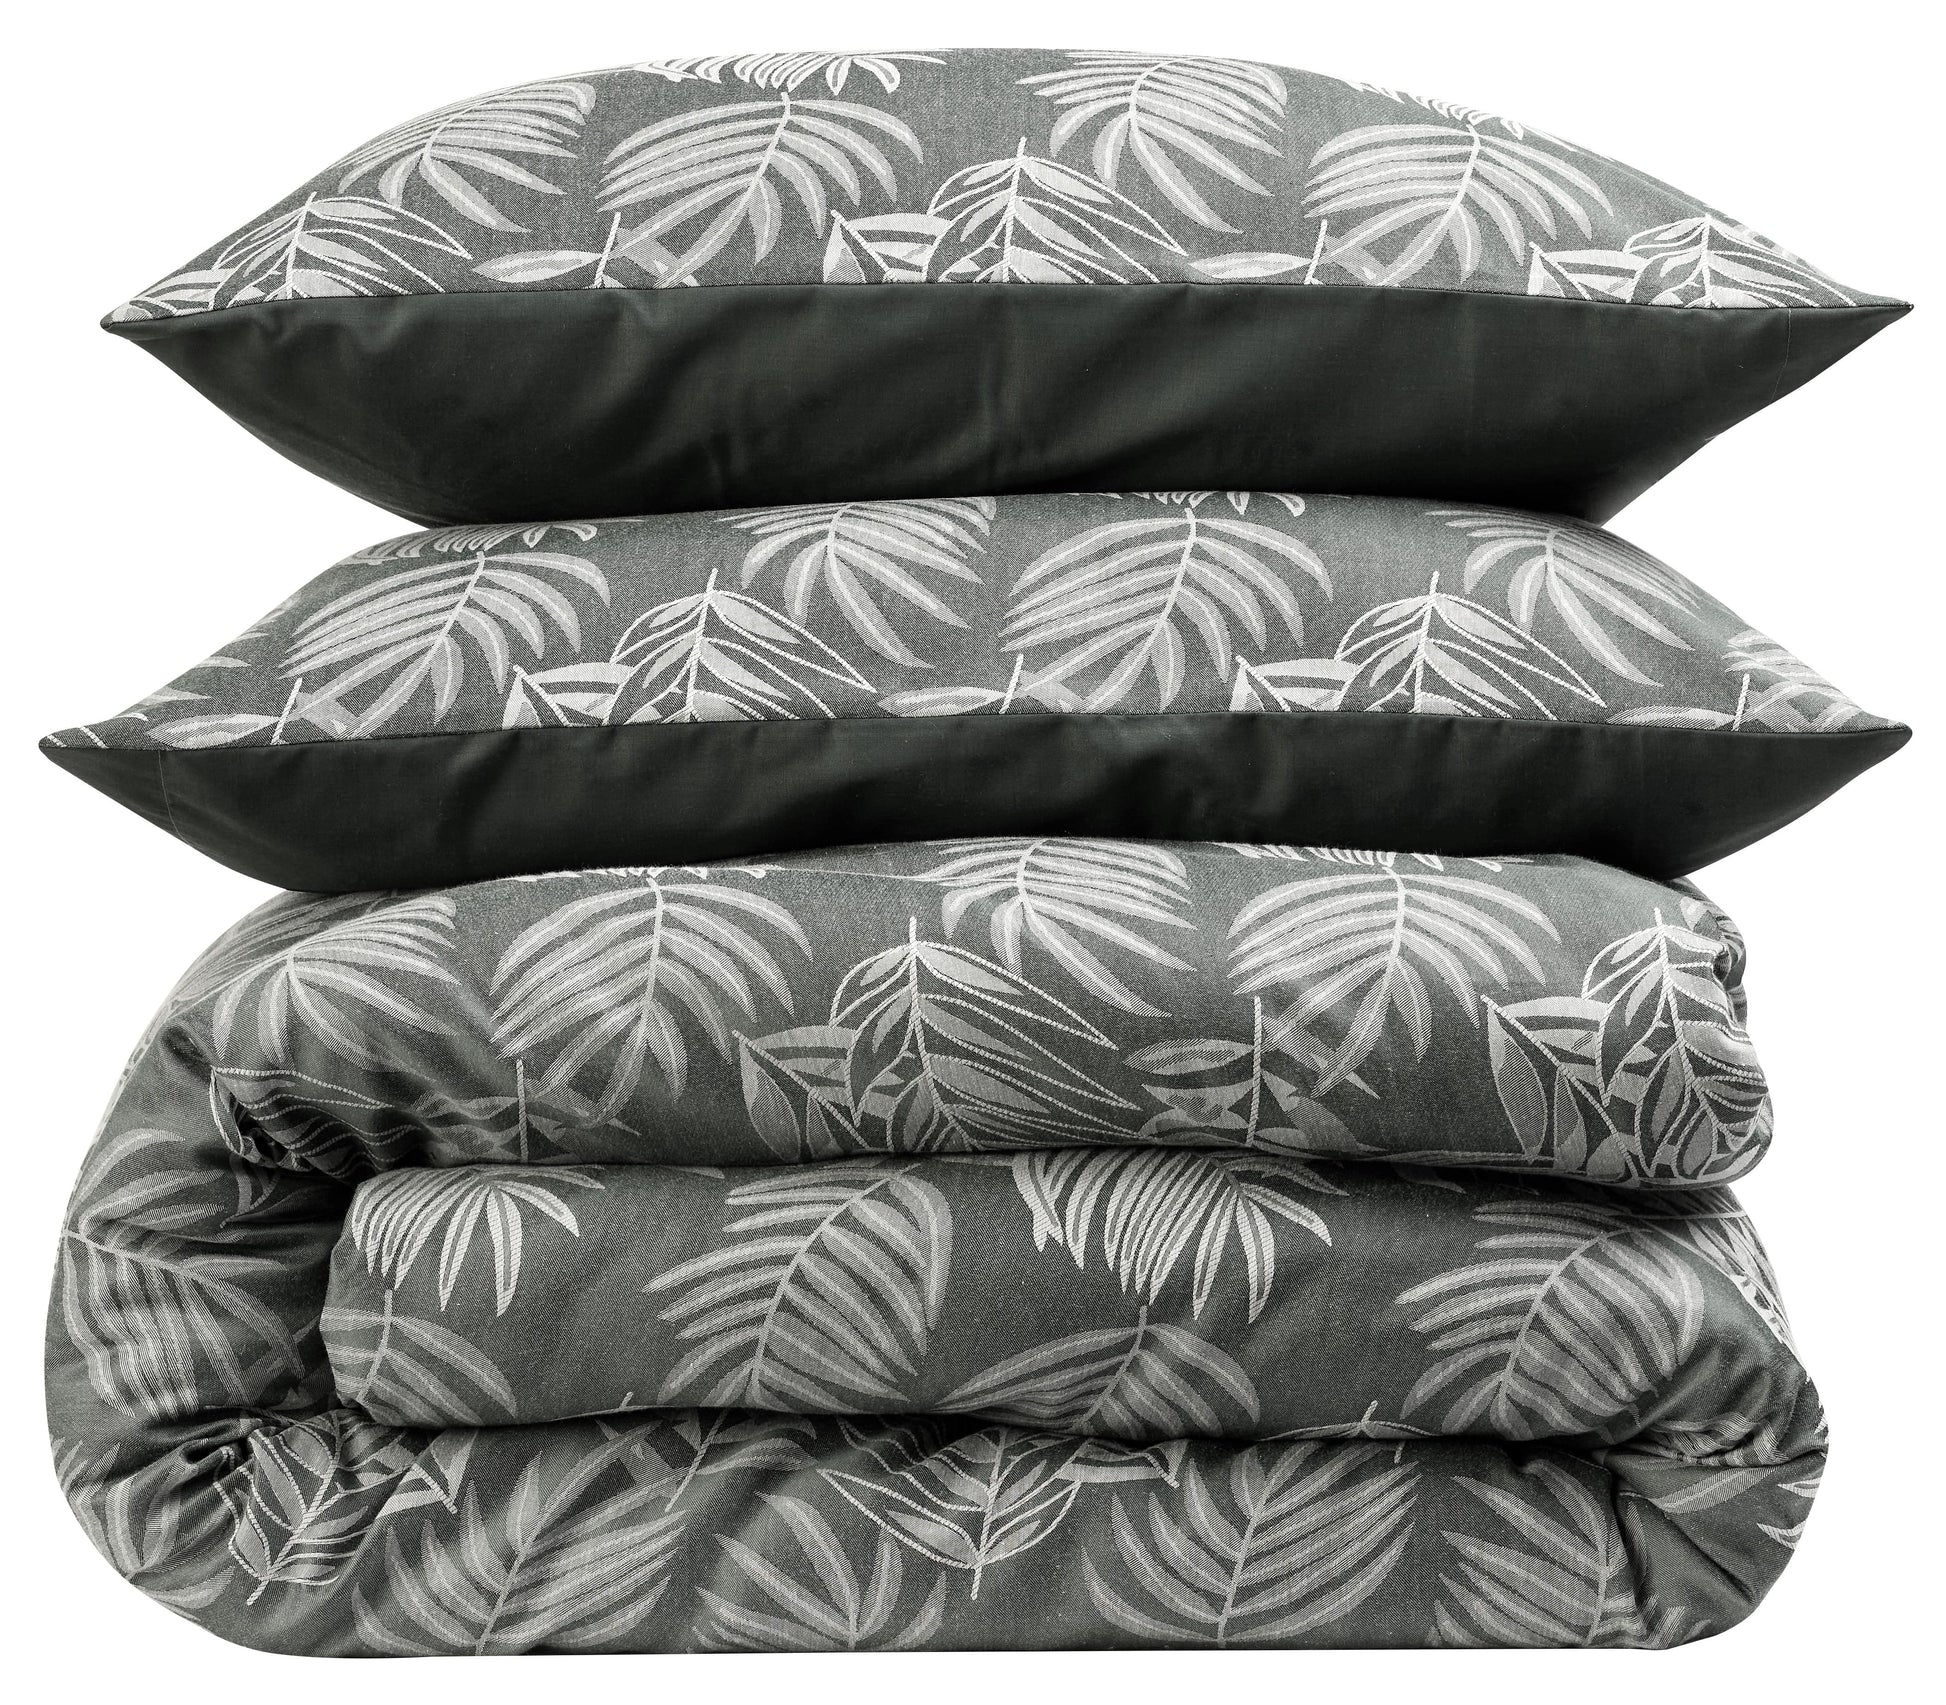 Nima Leaf Super Double Cotton Duvet Cover Set with Pillowcases 220x240